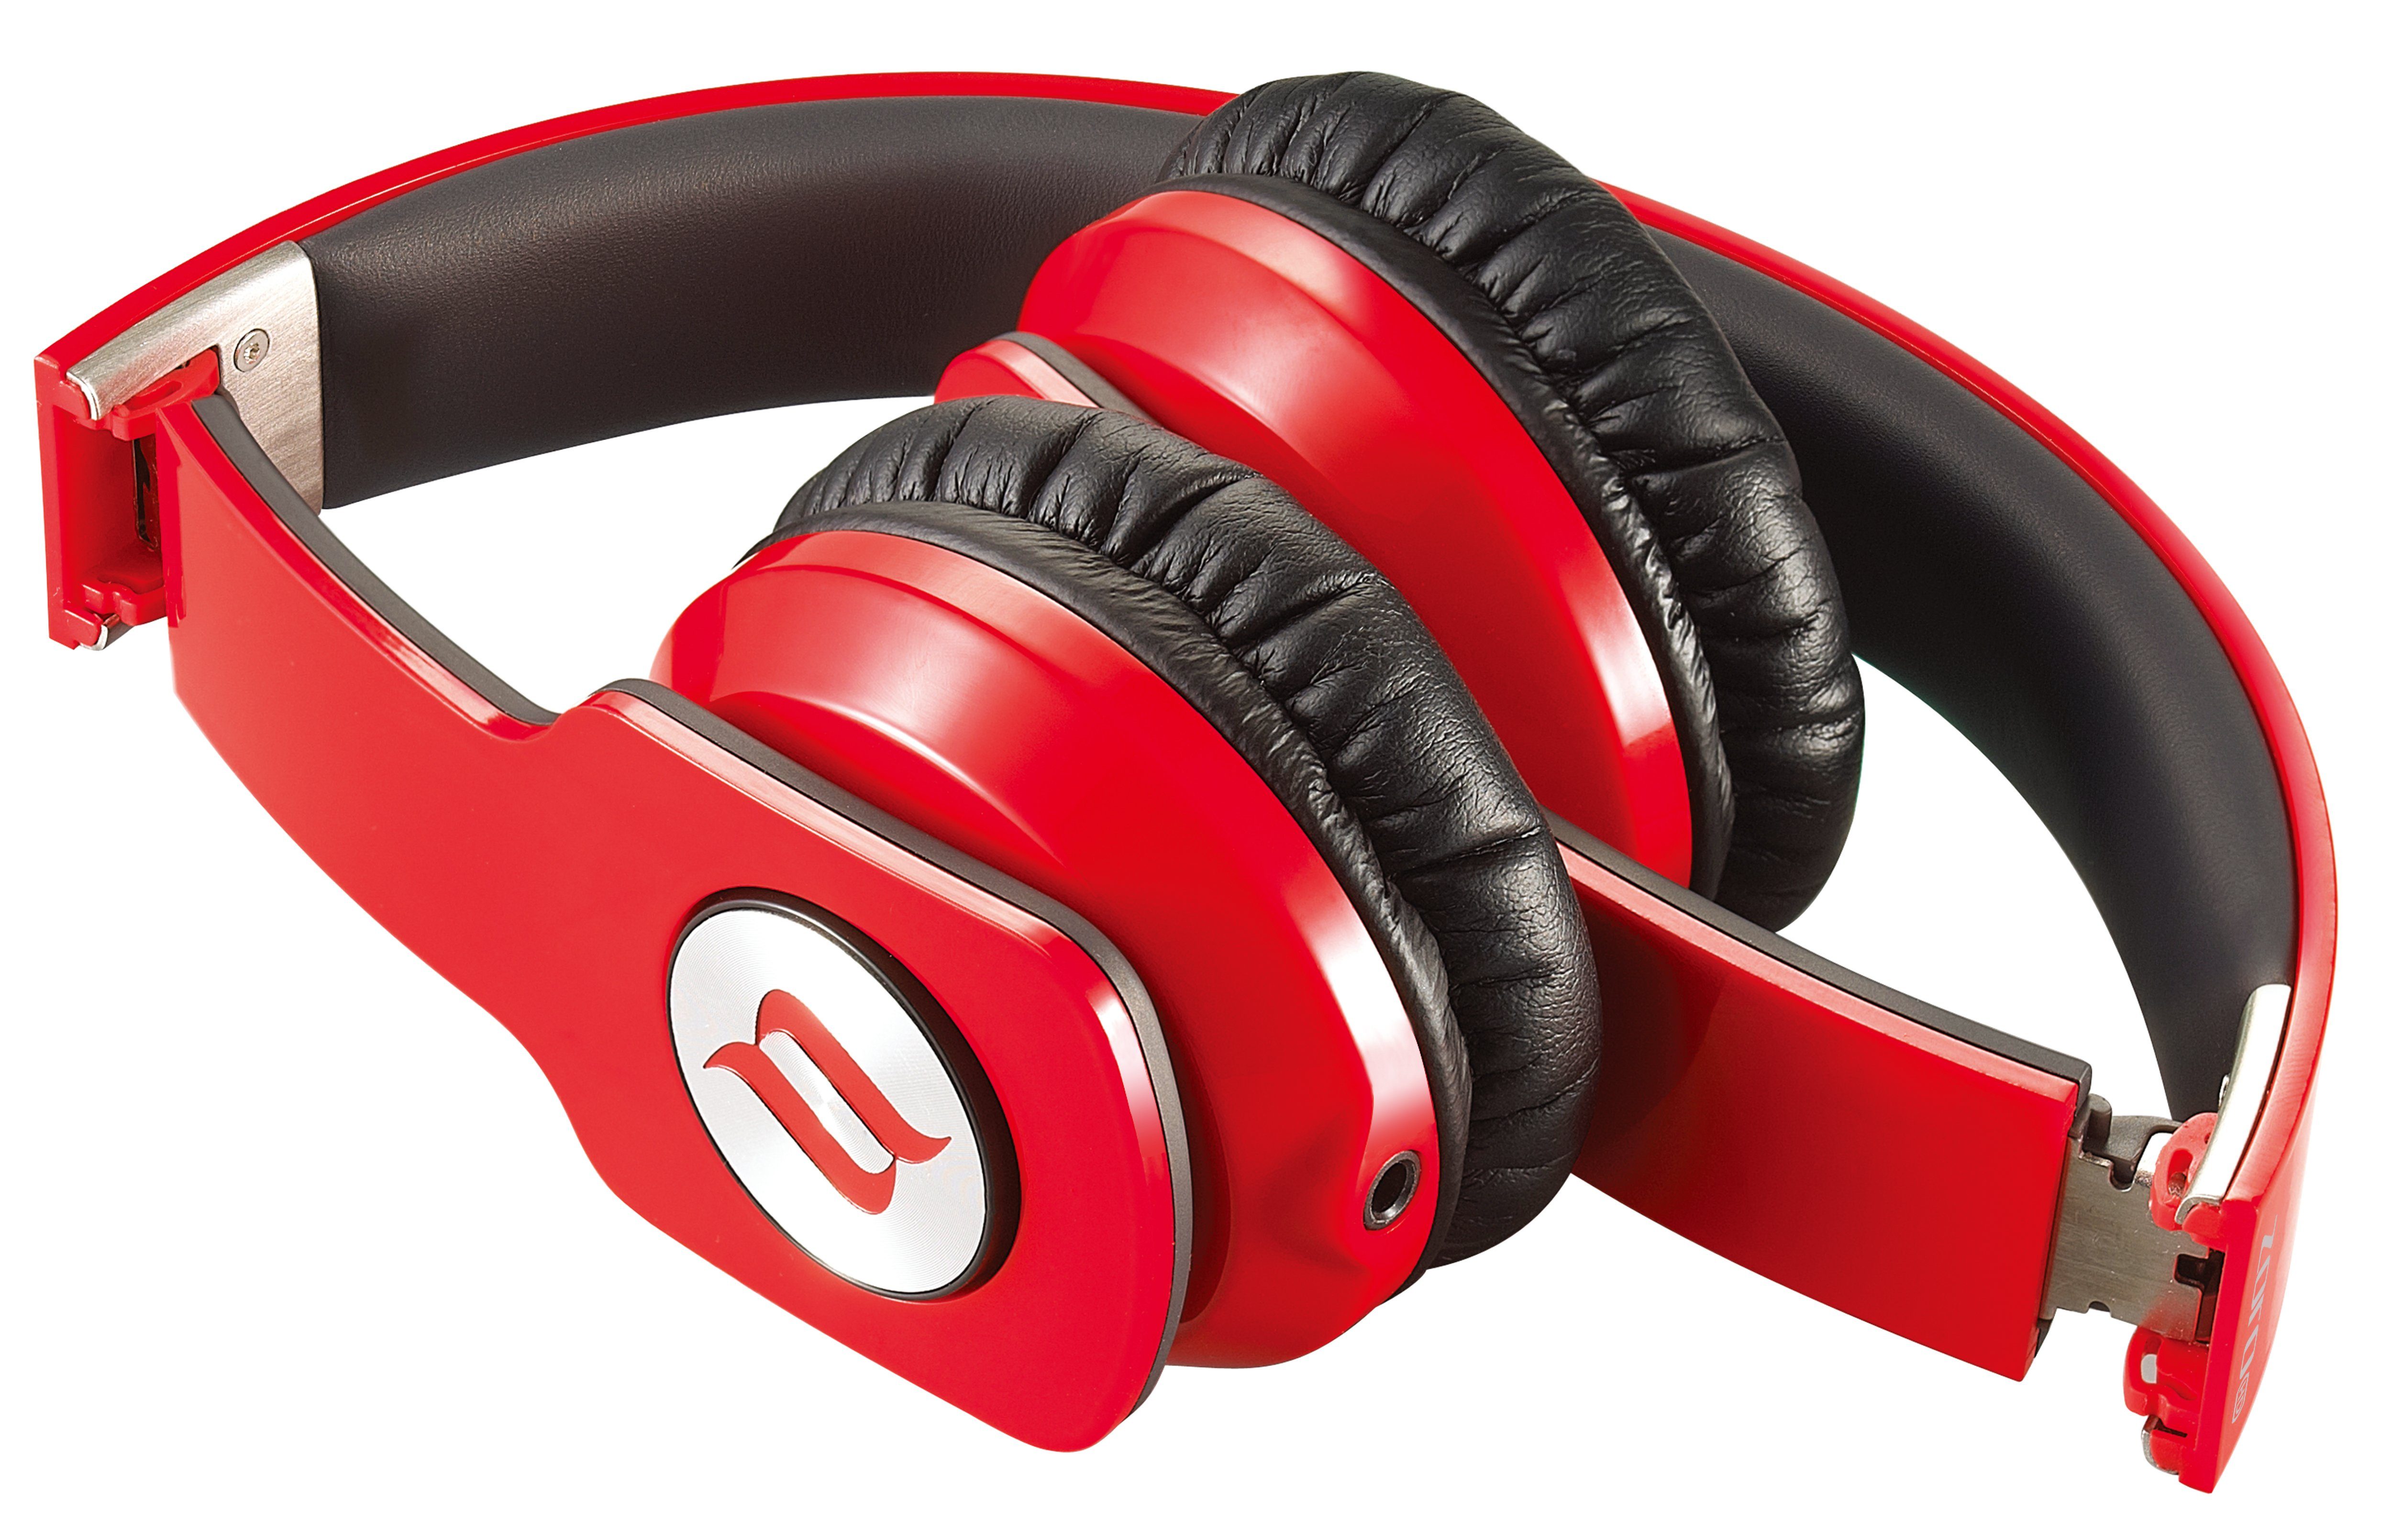 Poppstar Noontec Kopfhörer Zoro Flachkabel) HD Zoro On-Ear-Kopfhörer MF3120(S) Rot mit Kopfhörer (kabelgebunden